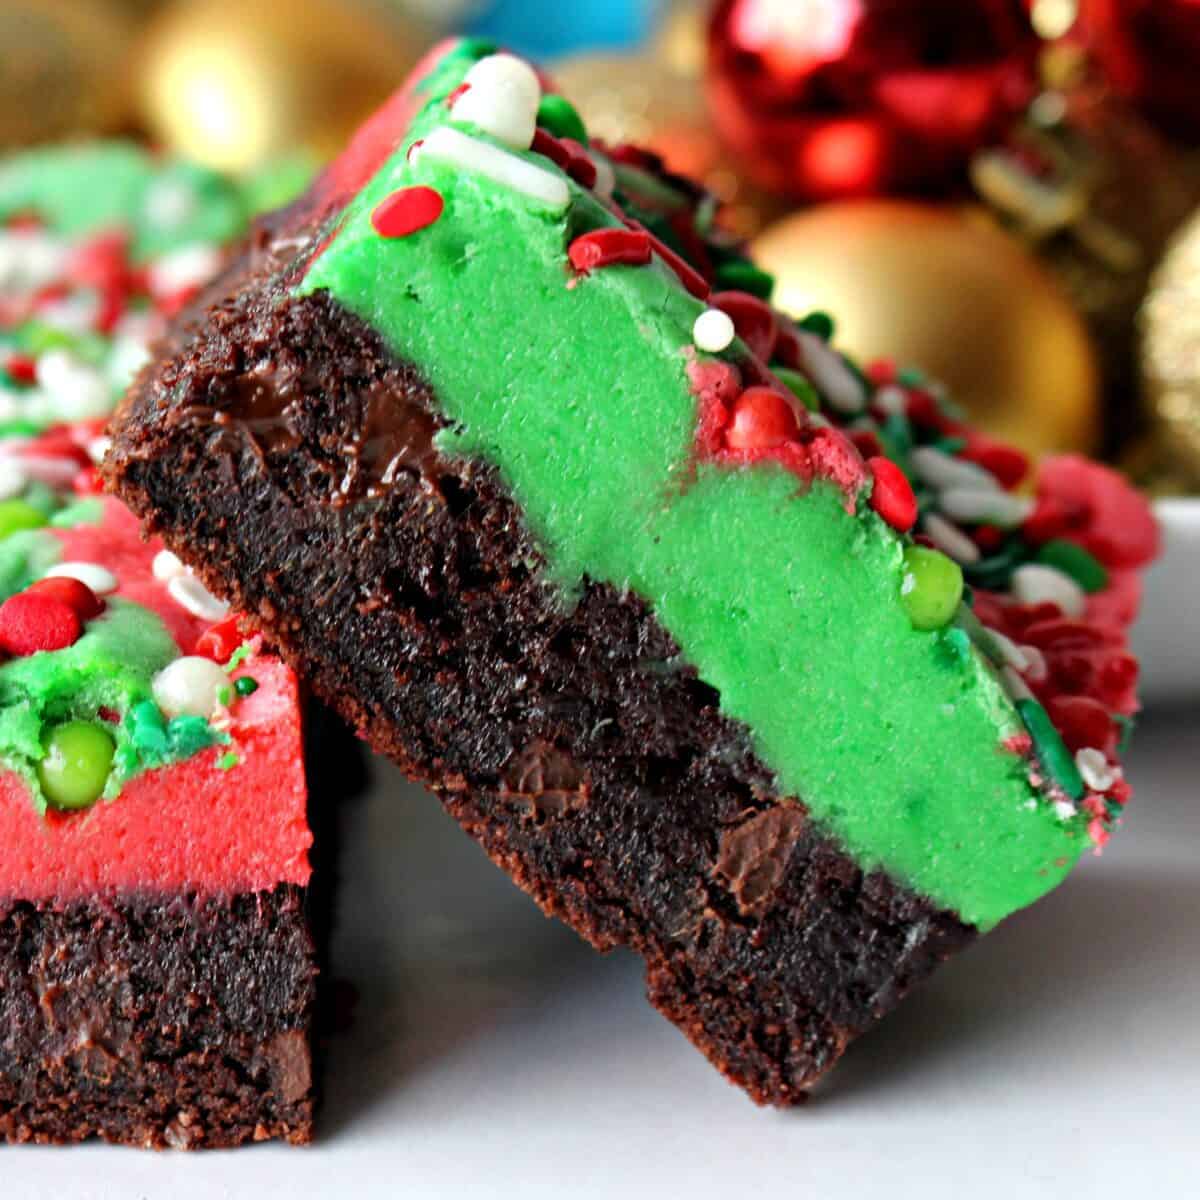 a slice of Christmas brown-green brownie